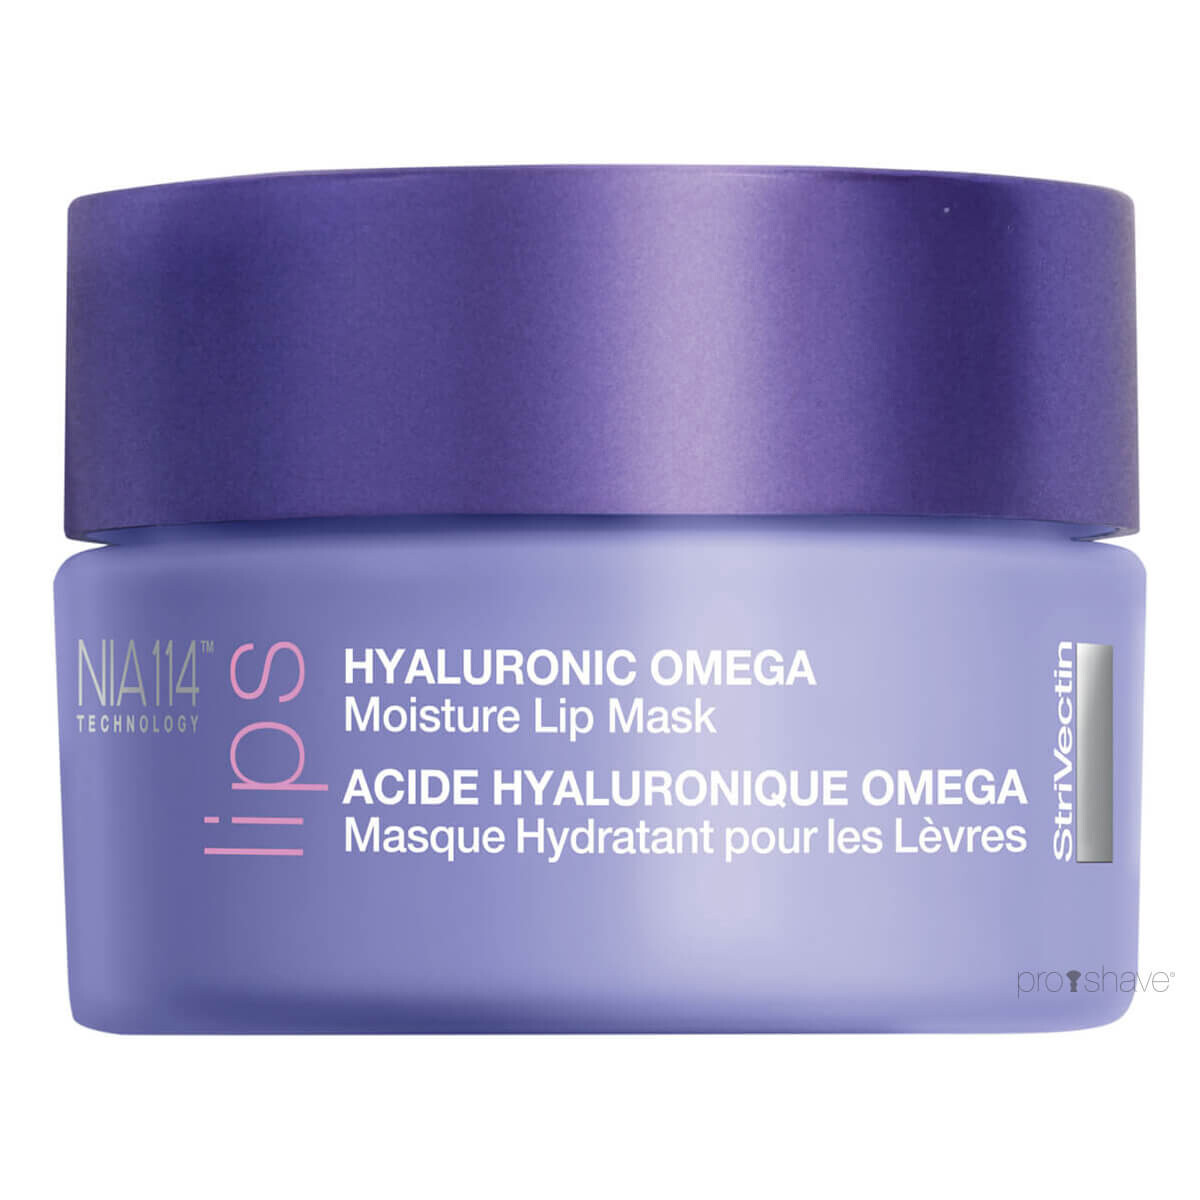 Strivectin Hyaluronic Omega Moisture Lip Mask, Advanced Hydration, 10 ml.